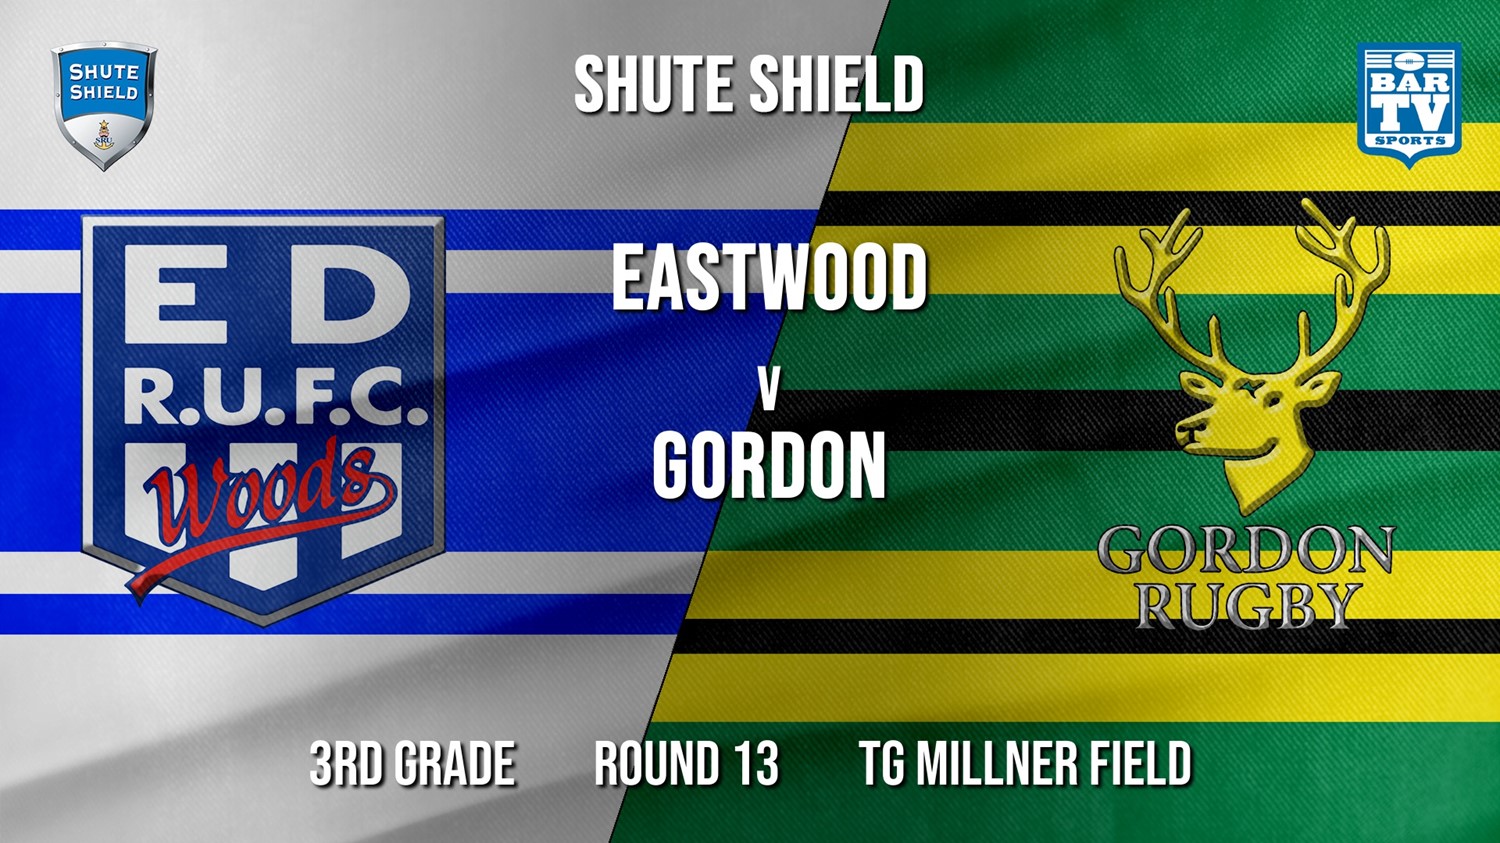 Shute Shield Round 13 - 3rd Grade - Eastwood v Gordon Minigame Slate Image